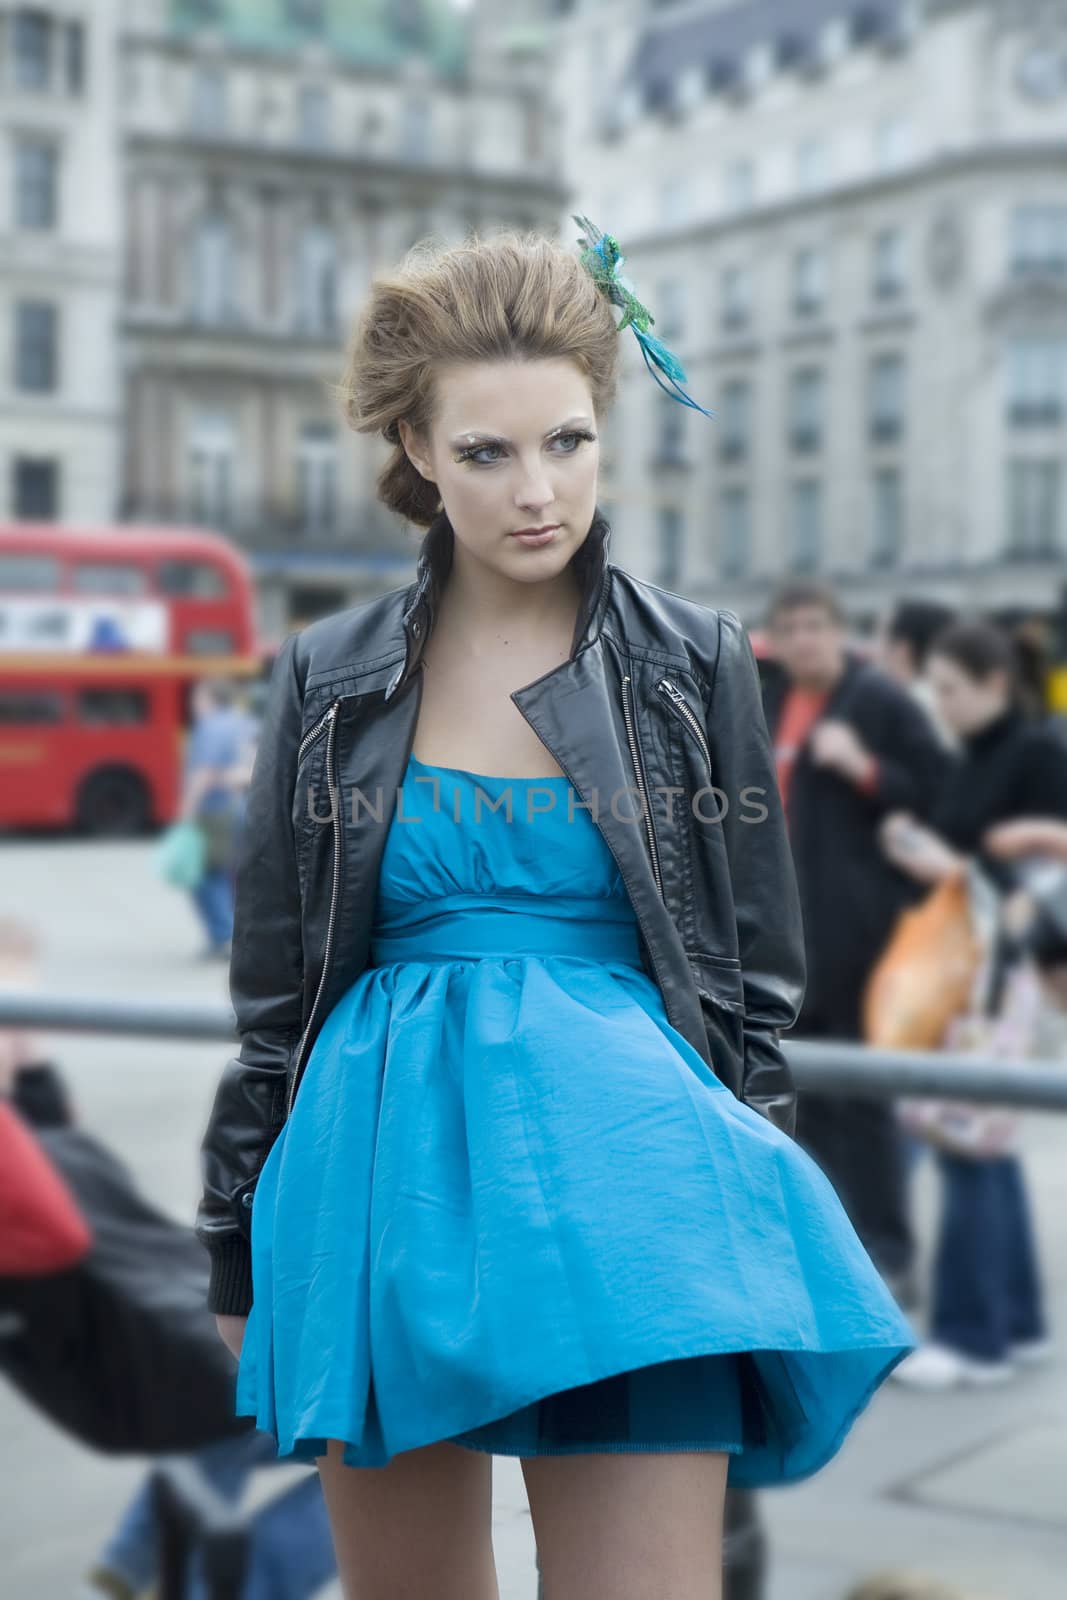 attrractive woman in blue dress posing front camera by elenarostunova